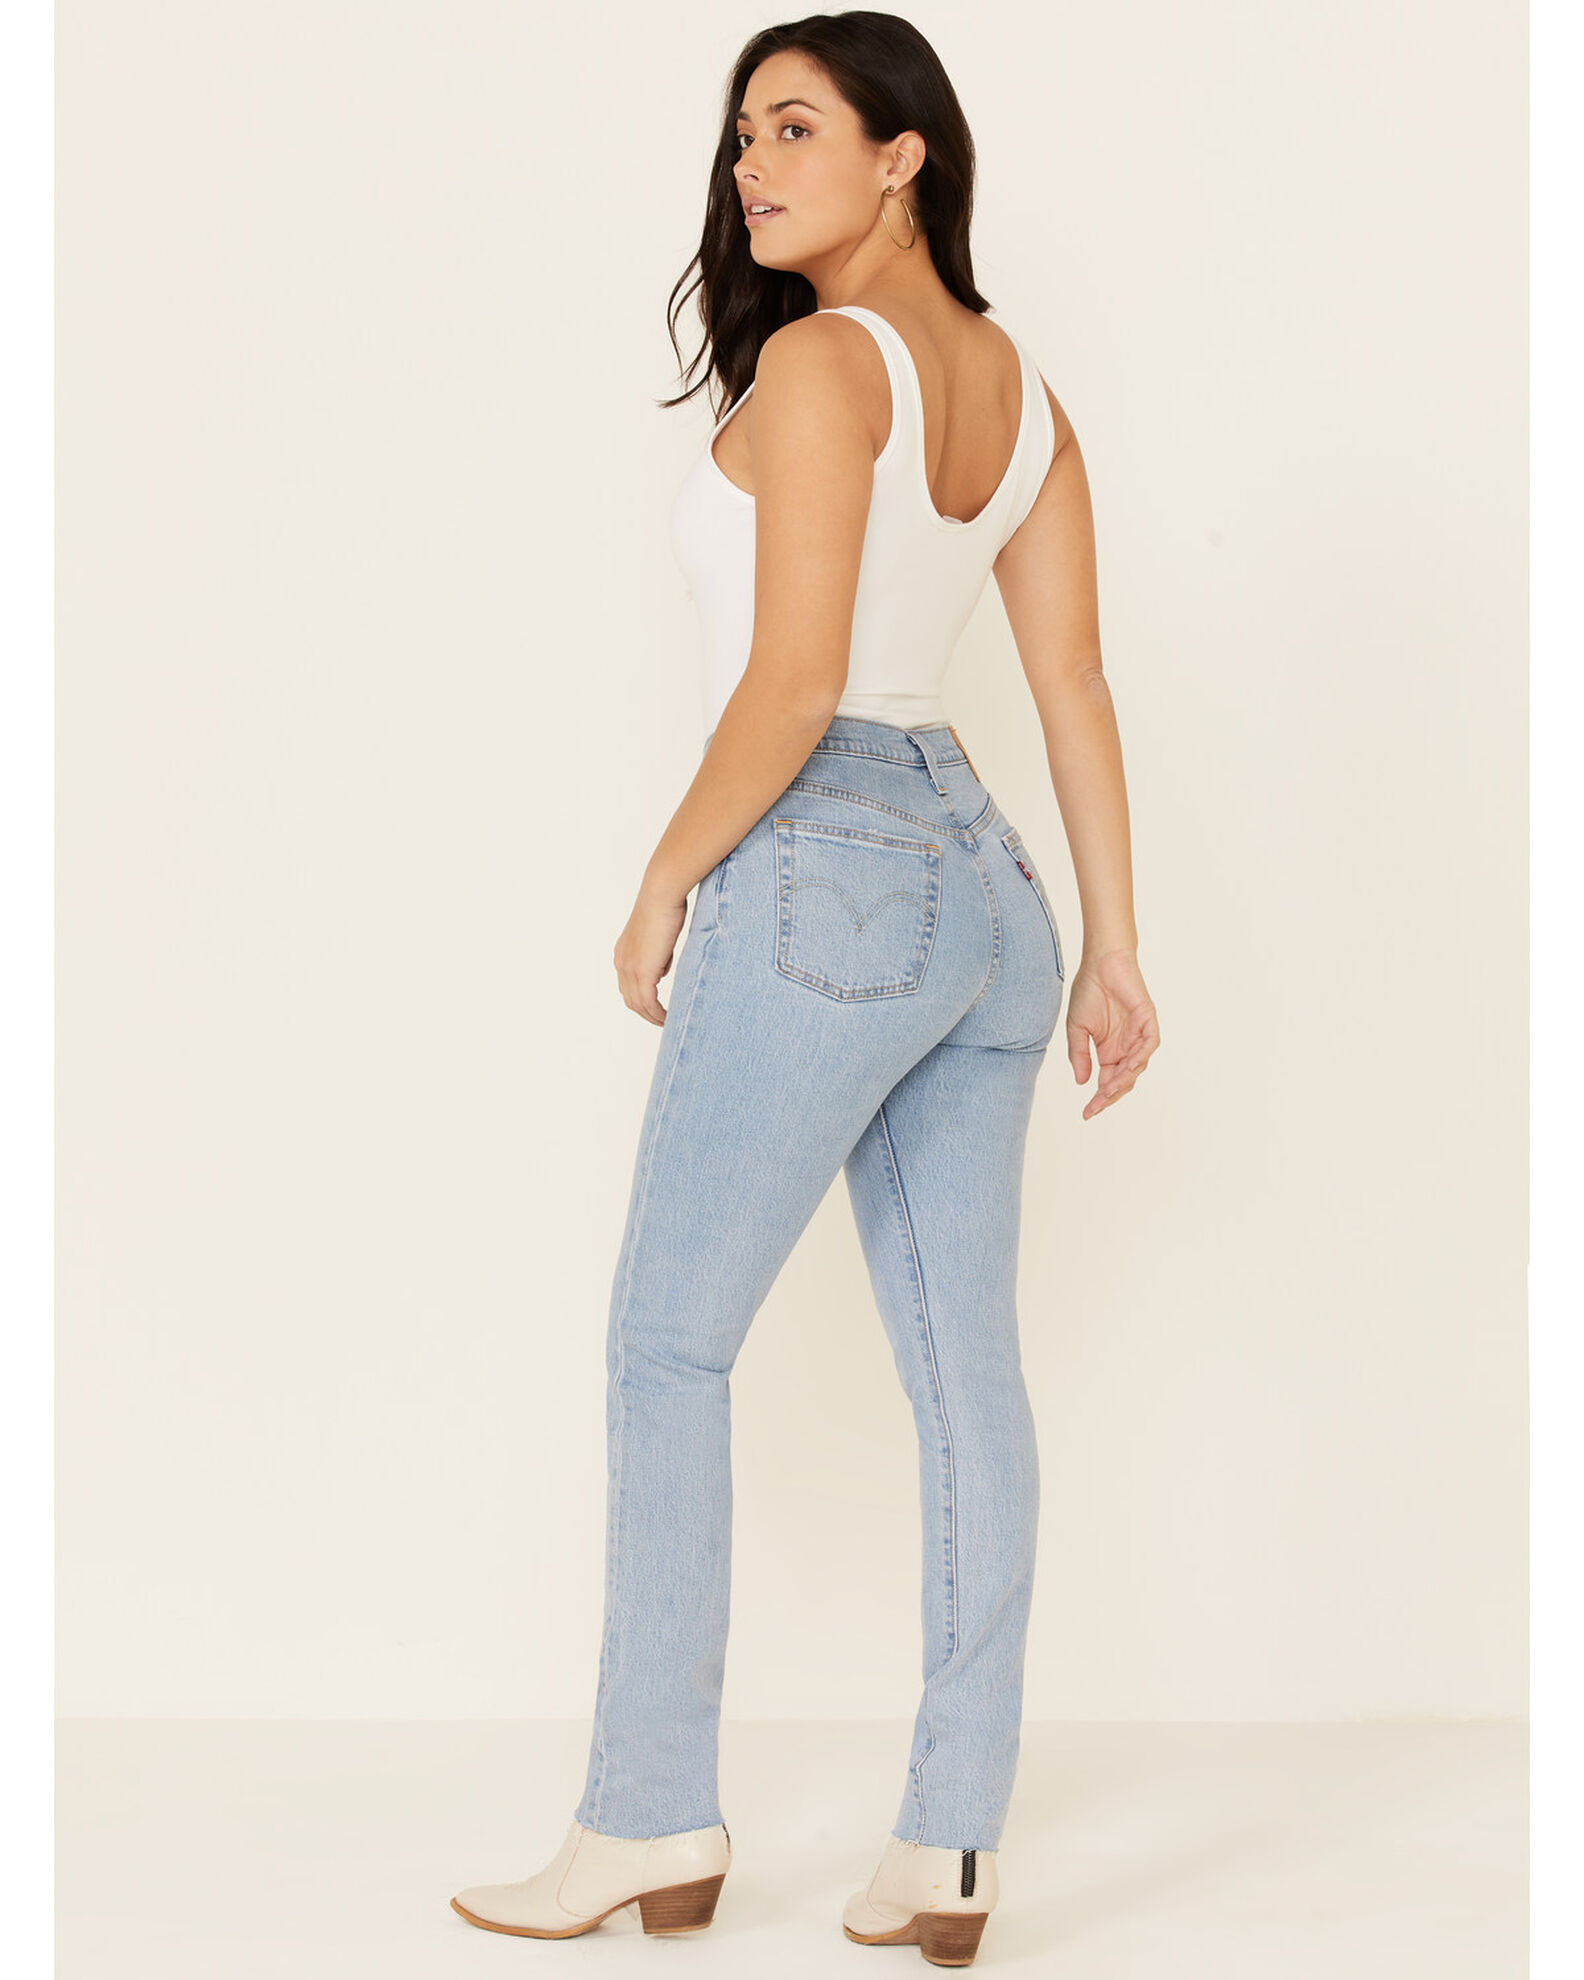 Product Name: Levi's Women's 501 Fray Hem Skinny Jeans